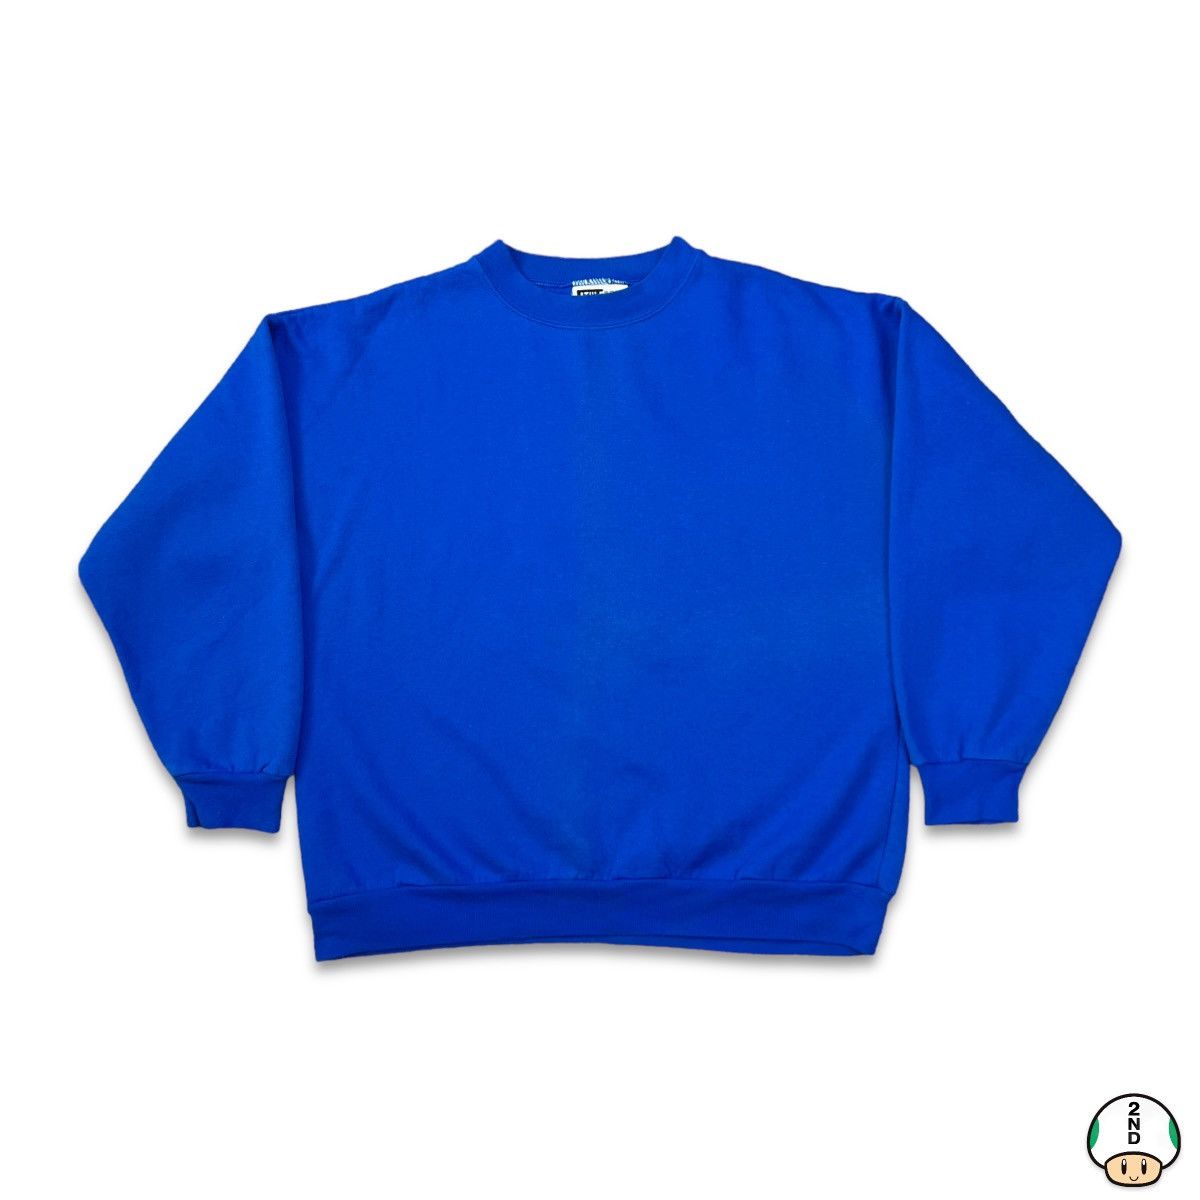 Vintage Vintage 90s Blank Sweatshirt Size US S / EU 44-46 / 1 - 1 Preview